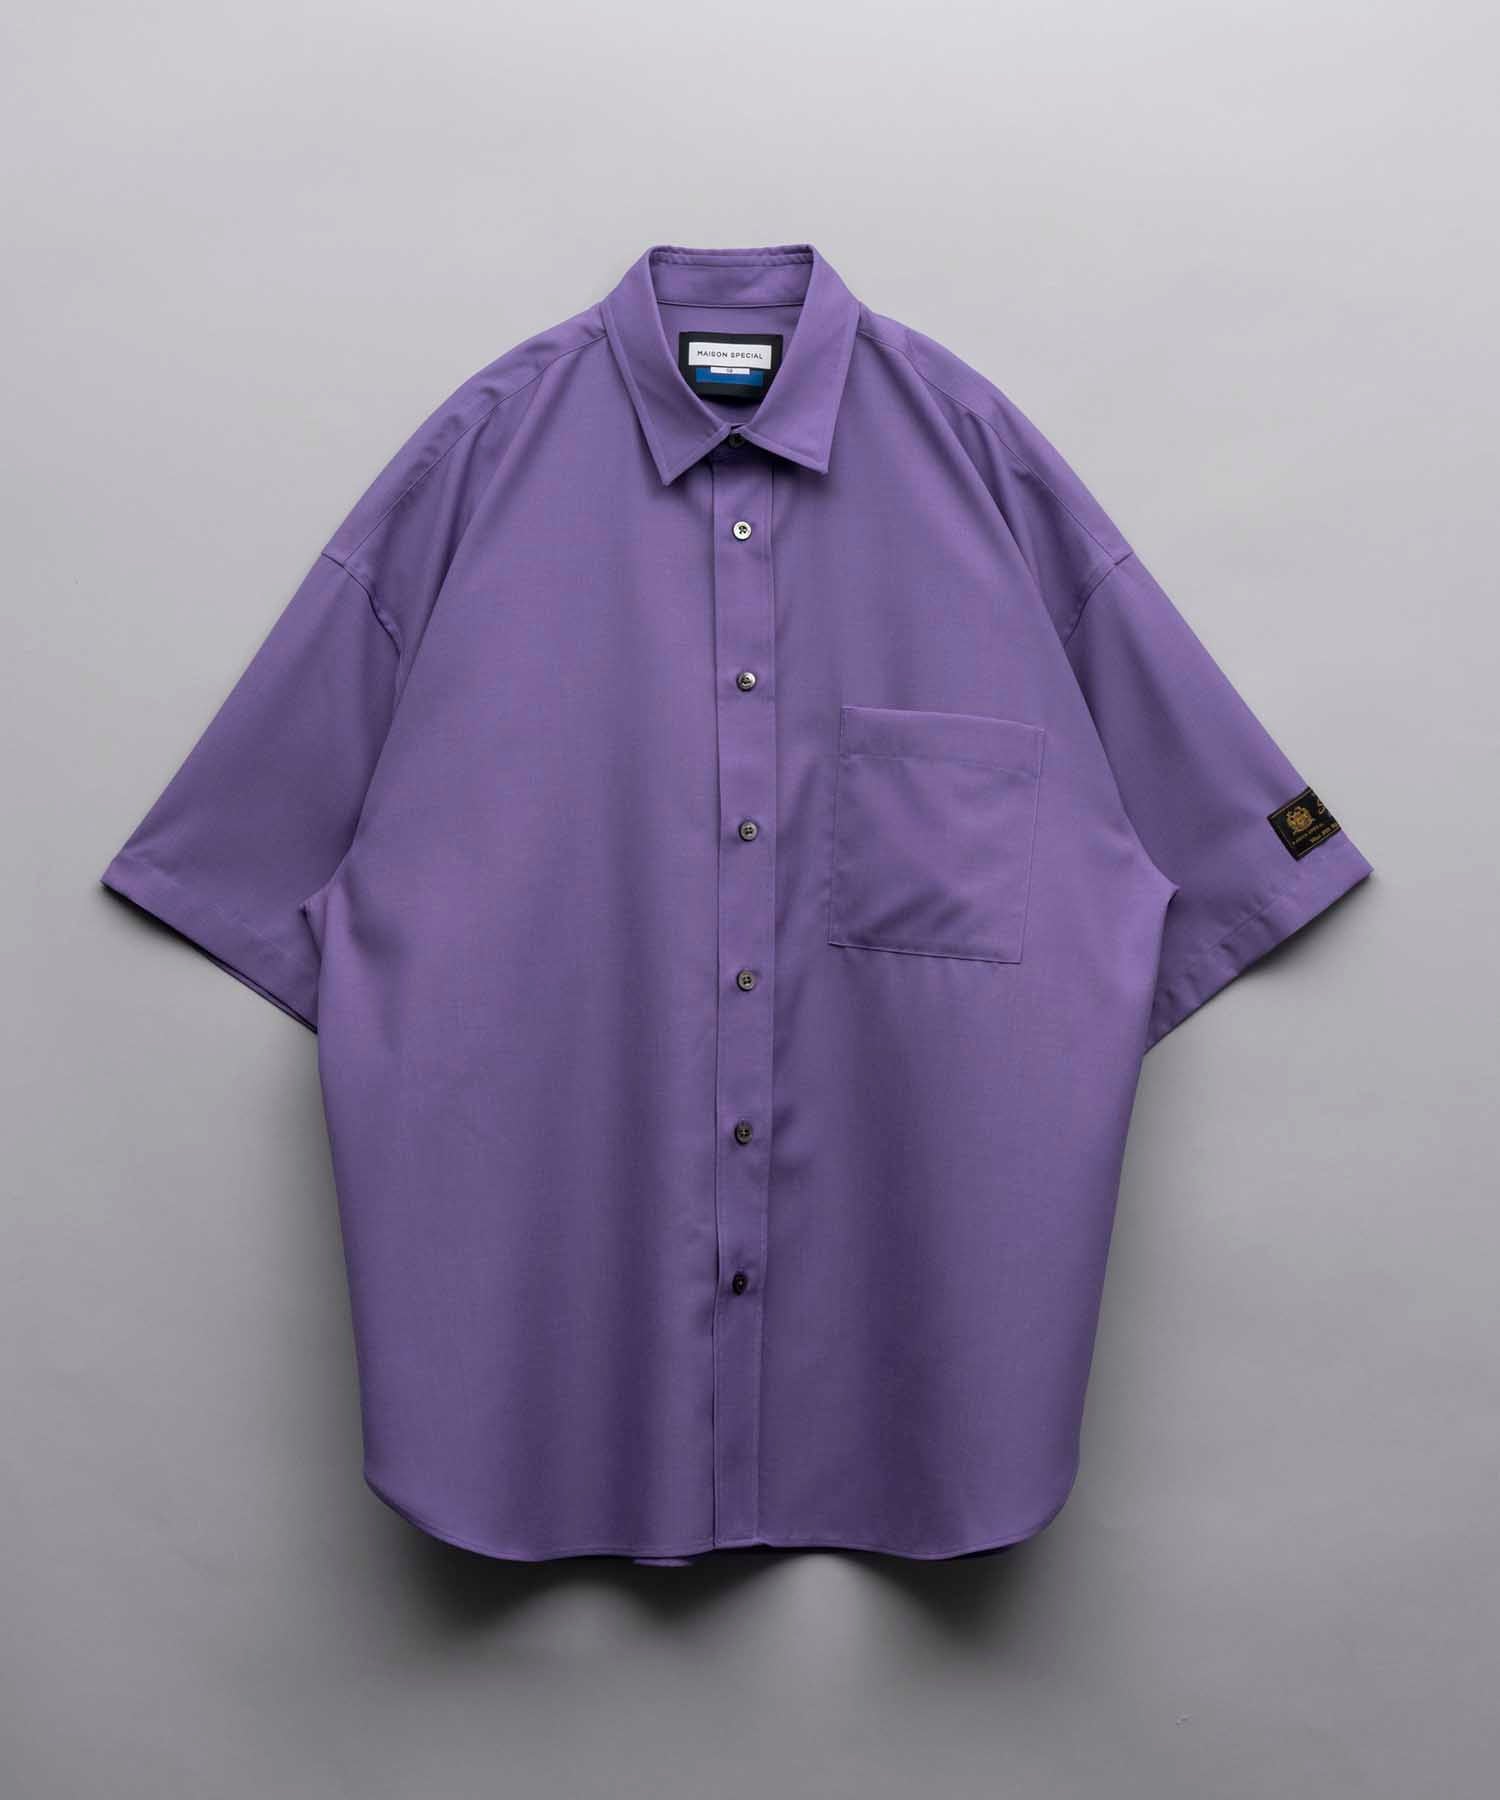 Schonherr Prime-Over Short Sleeve Shirt